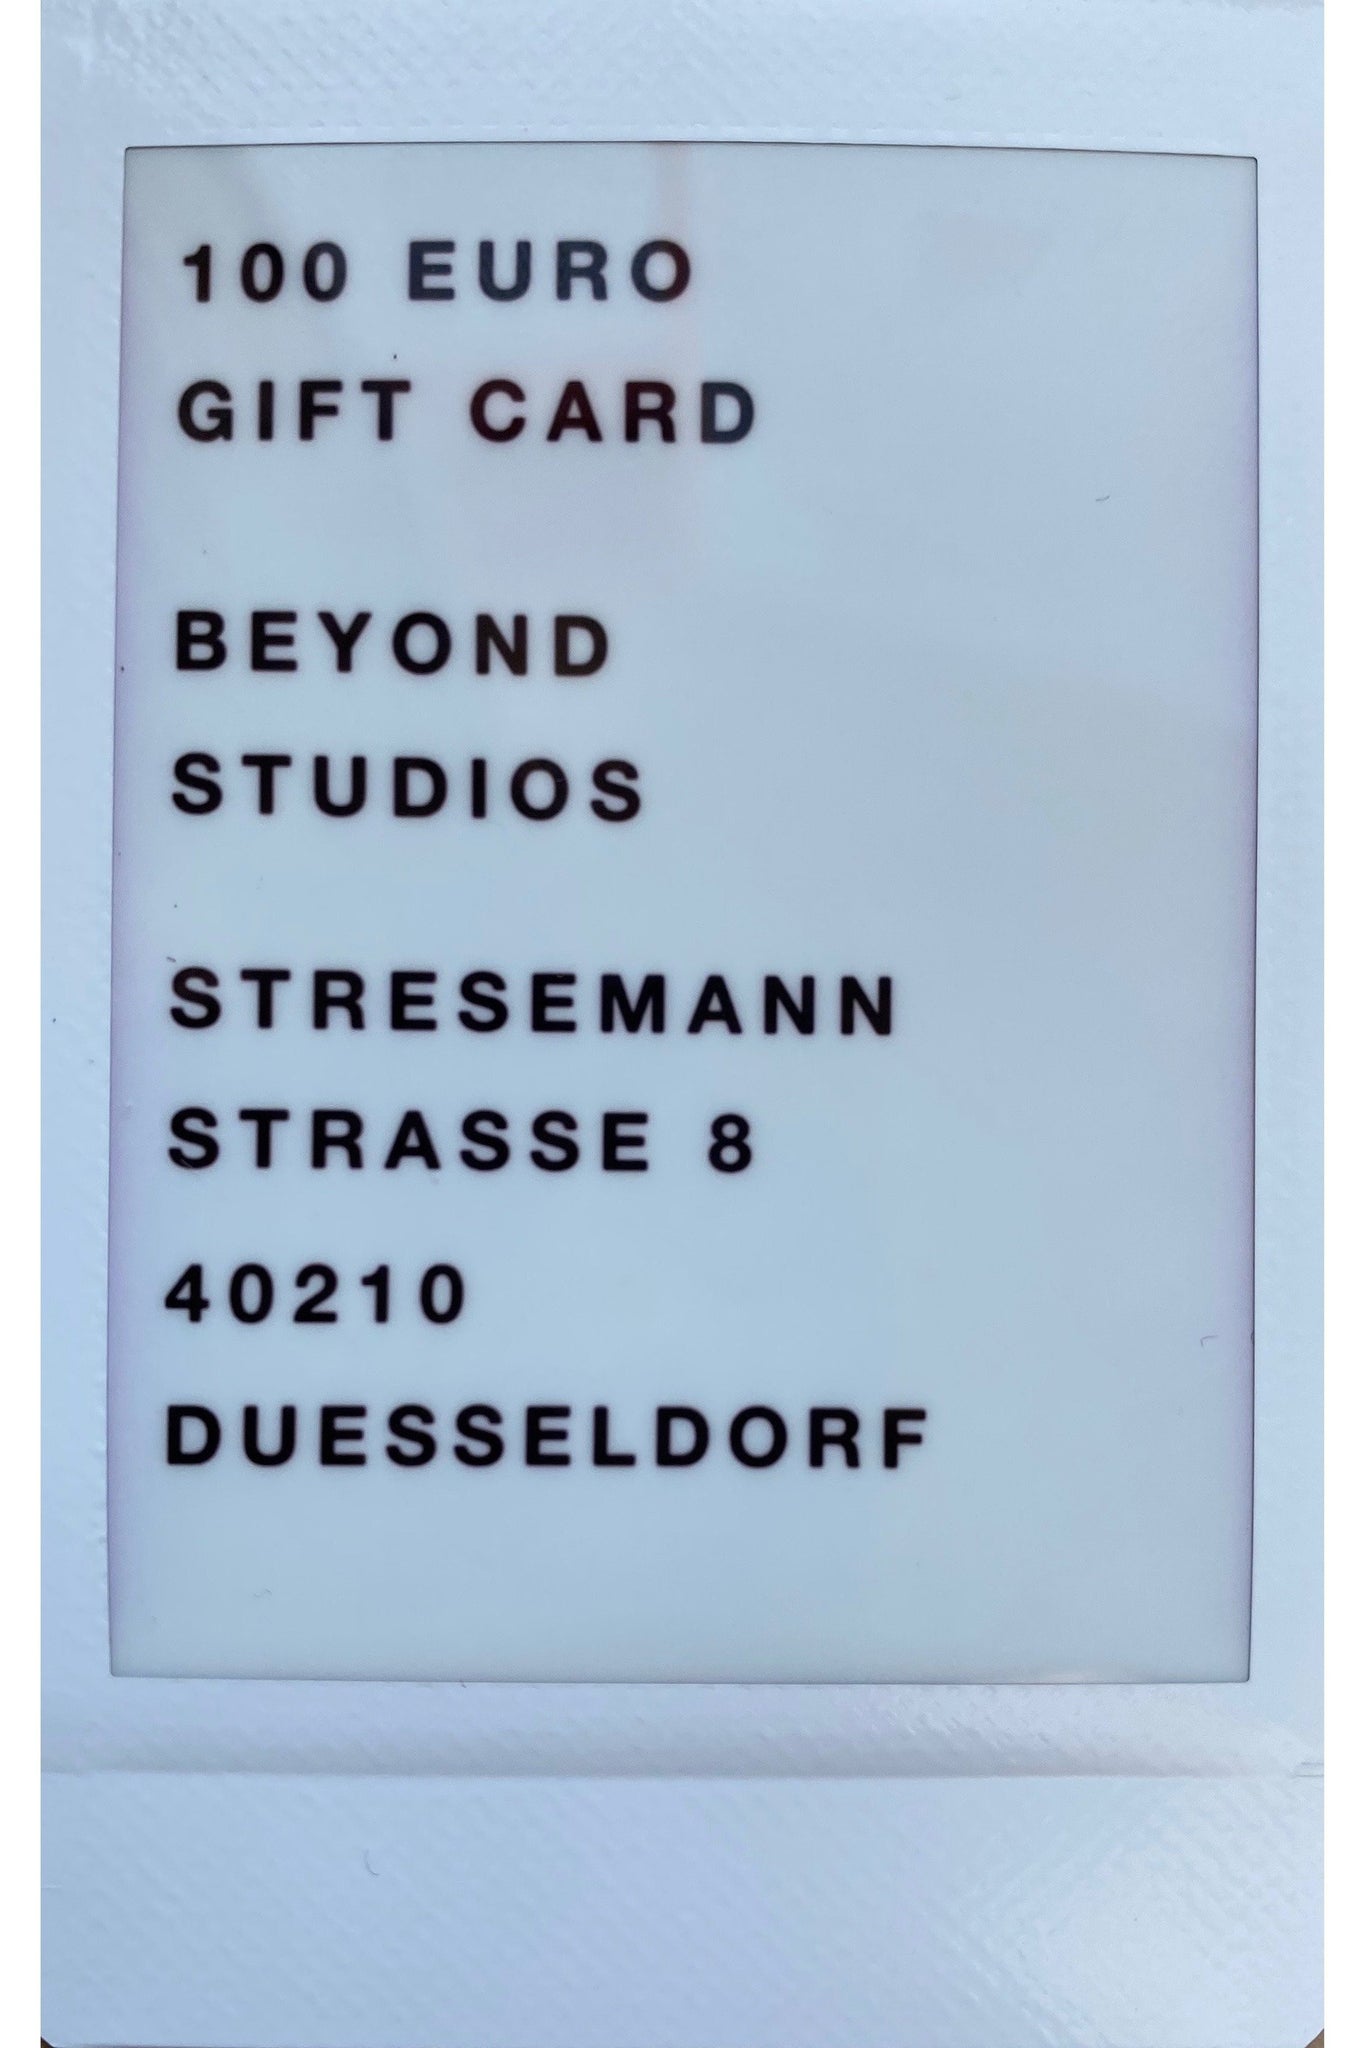 GIFT CARD - BEYOND STUDIOS